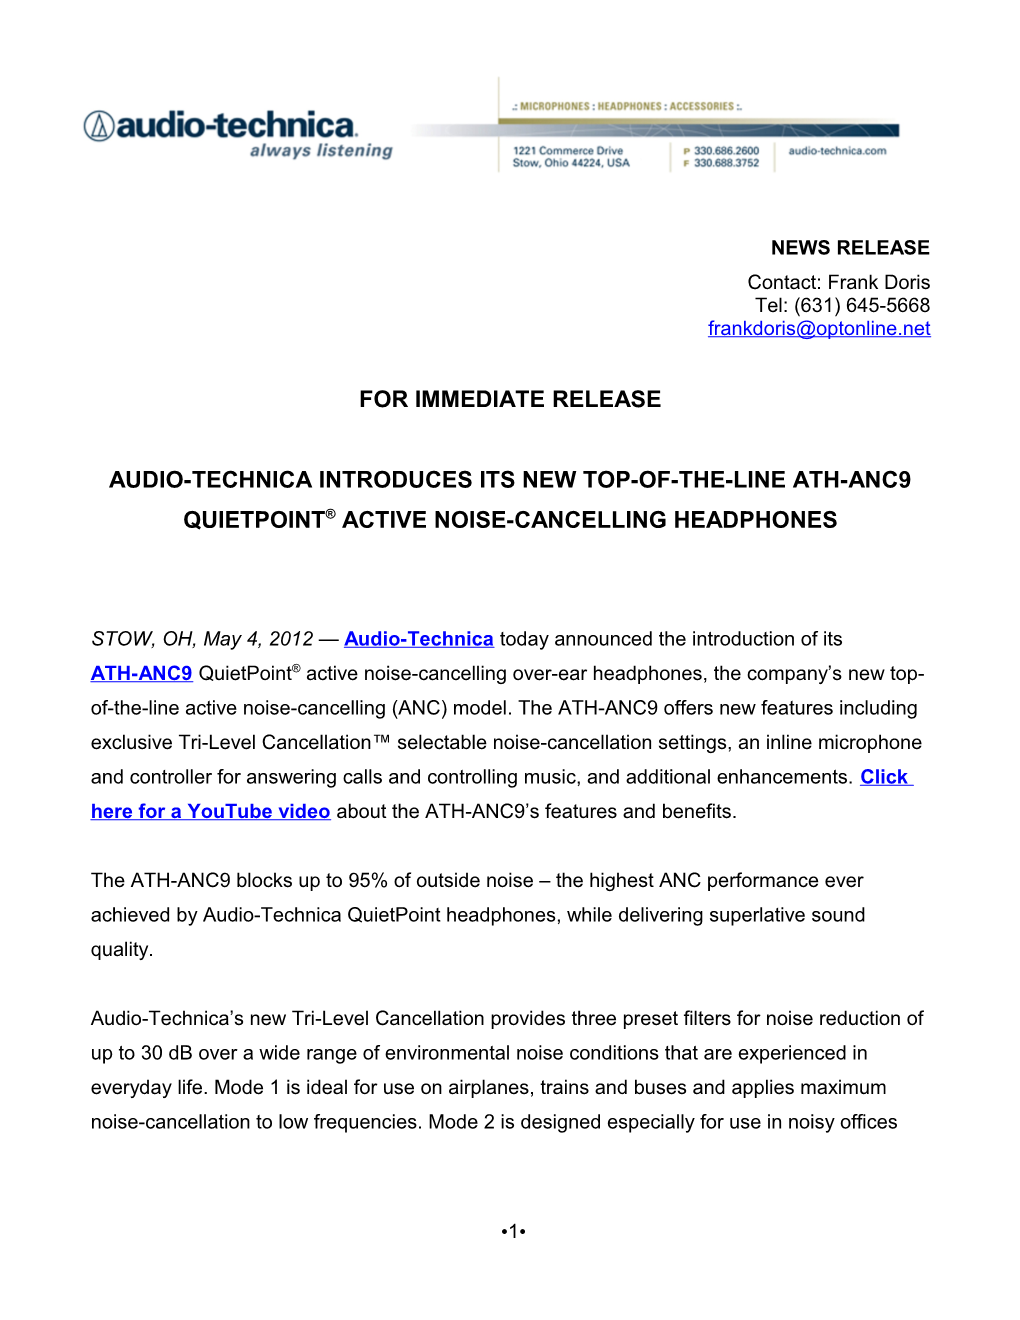 Audio-Technica ATH-Anc7b Innovations 2010 Press Release